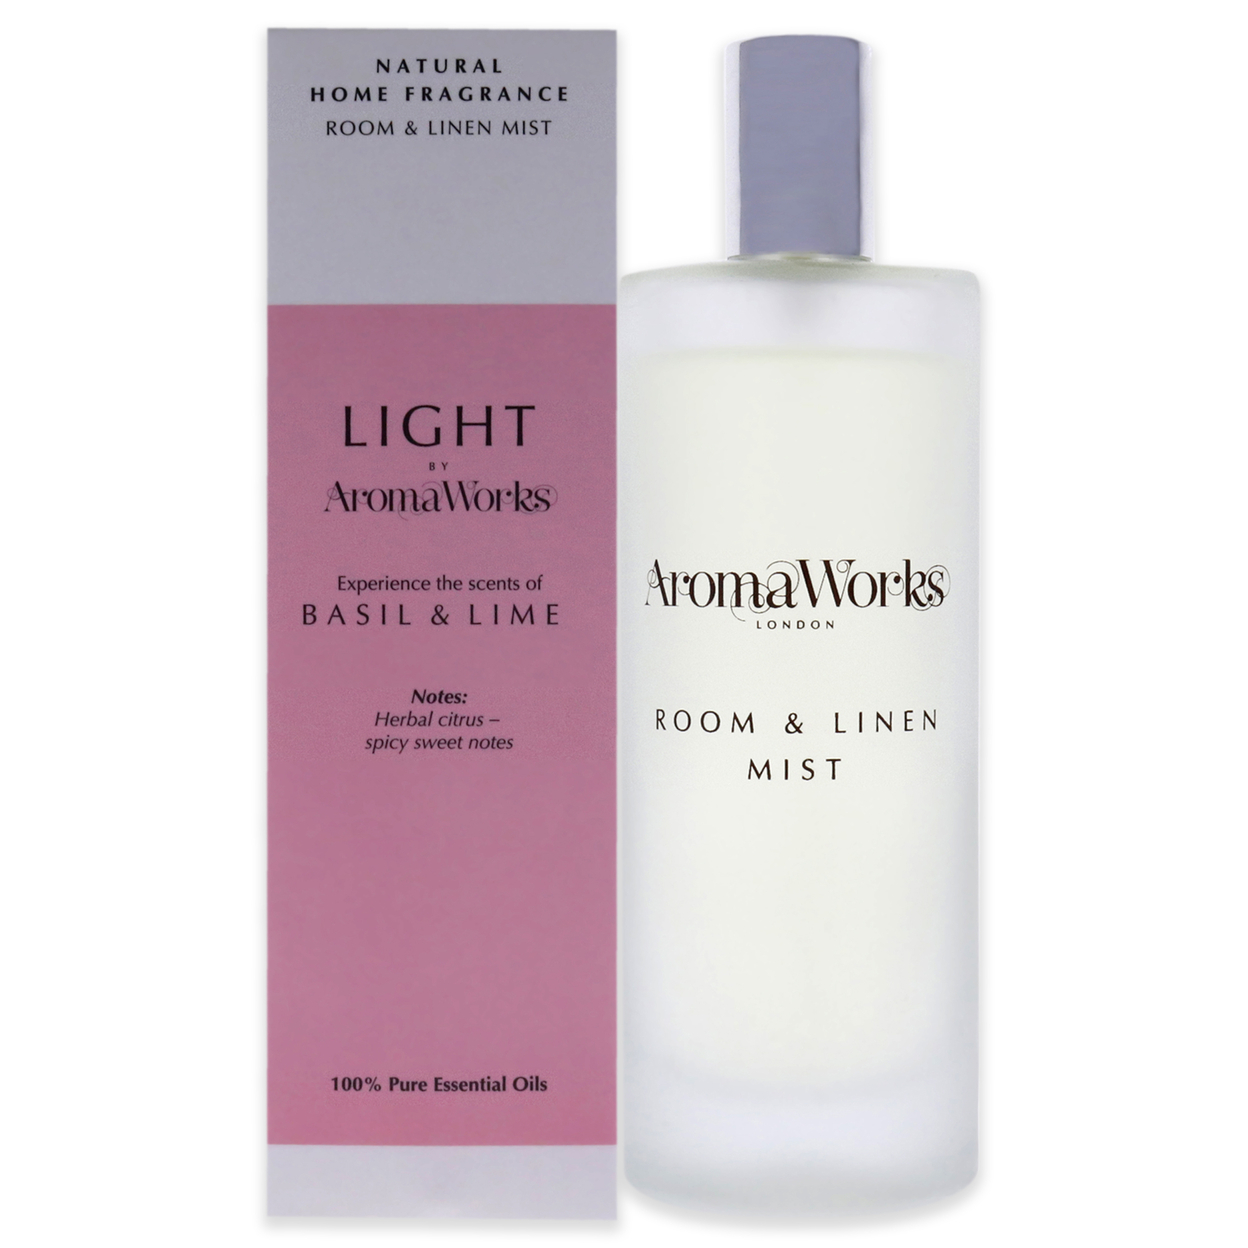 Aromaworks Light Room And Linen Mist - Basil And Lime Room Spray 3.4 Oz